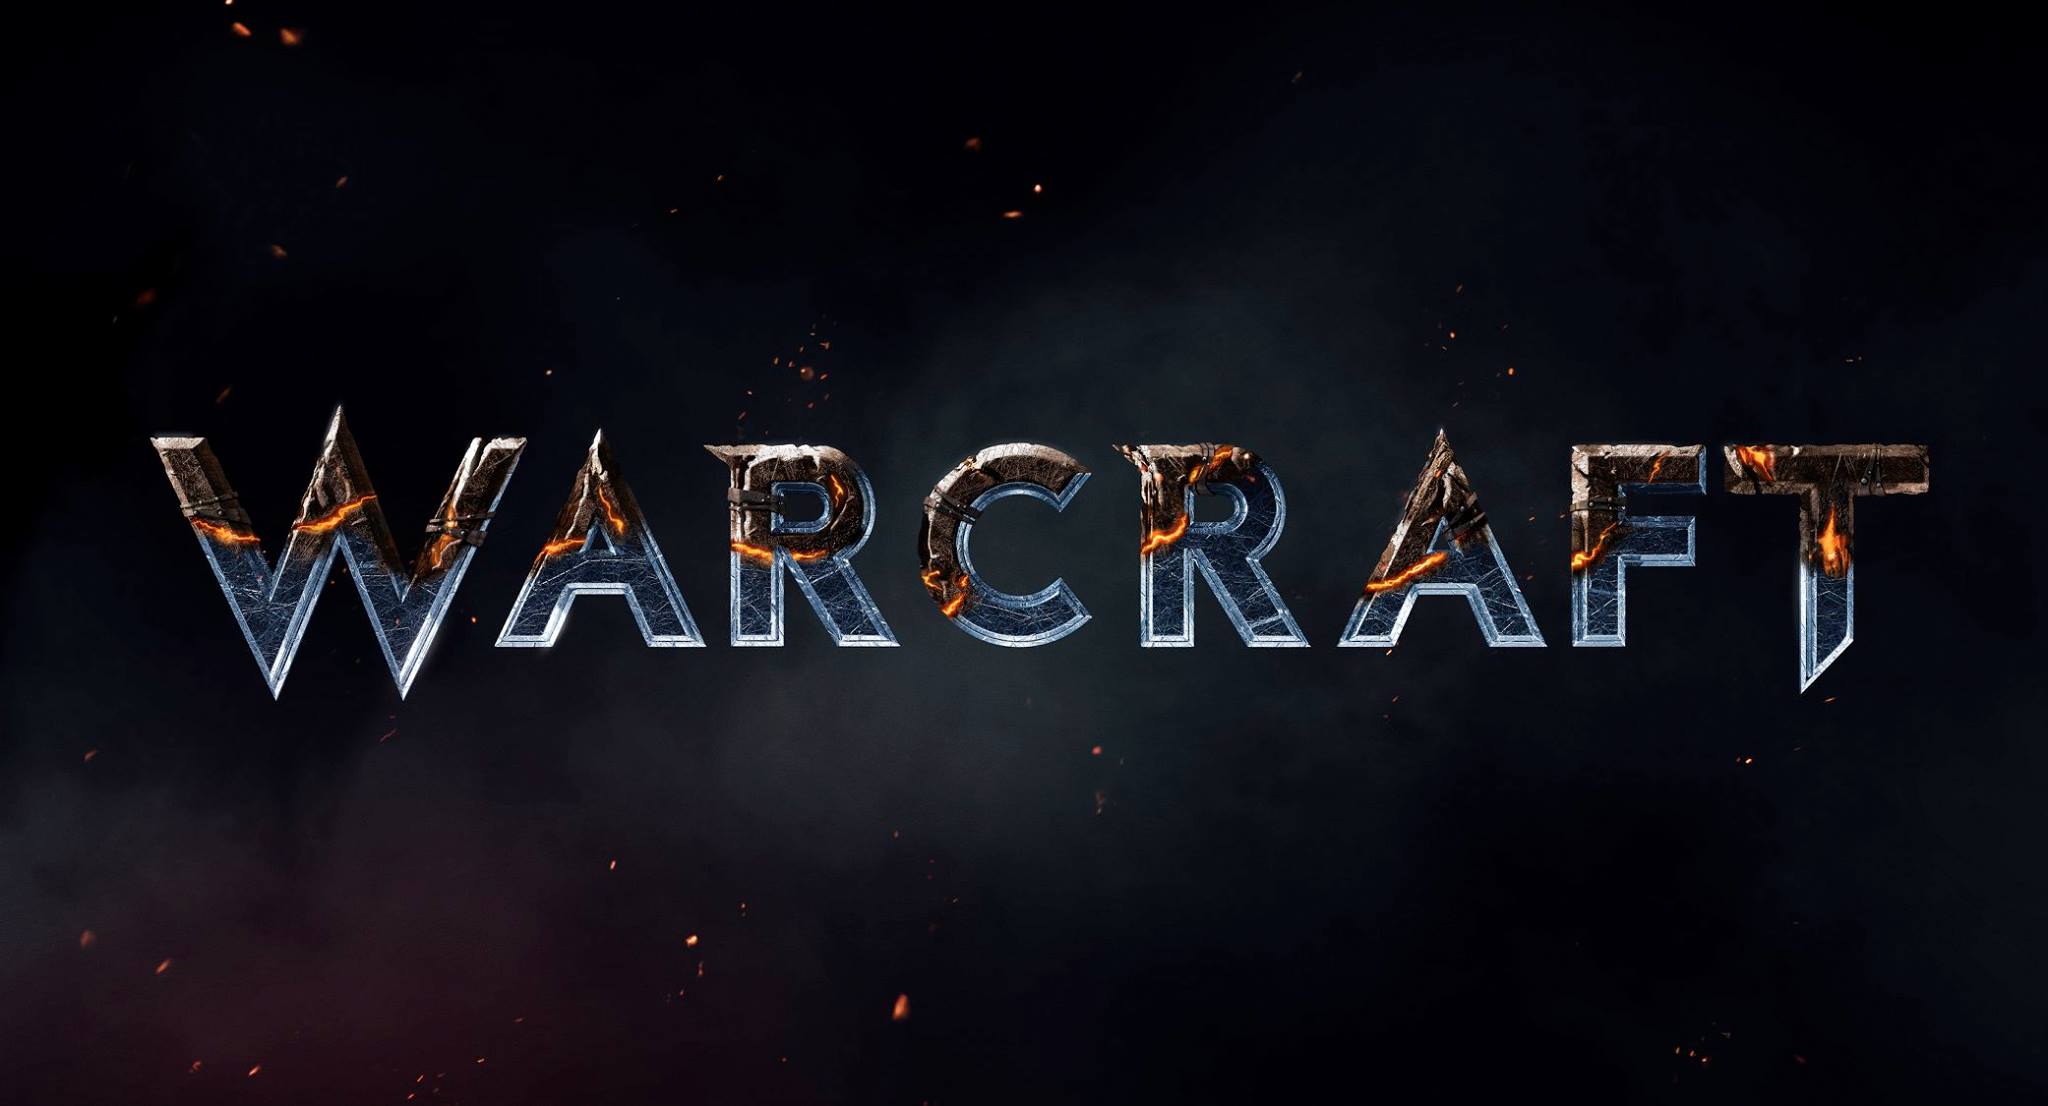 warcraft, logo, game Wallpaper, HD Games 4K Wallpaper, Image, Photo and Background